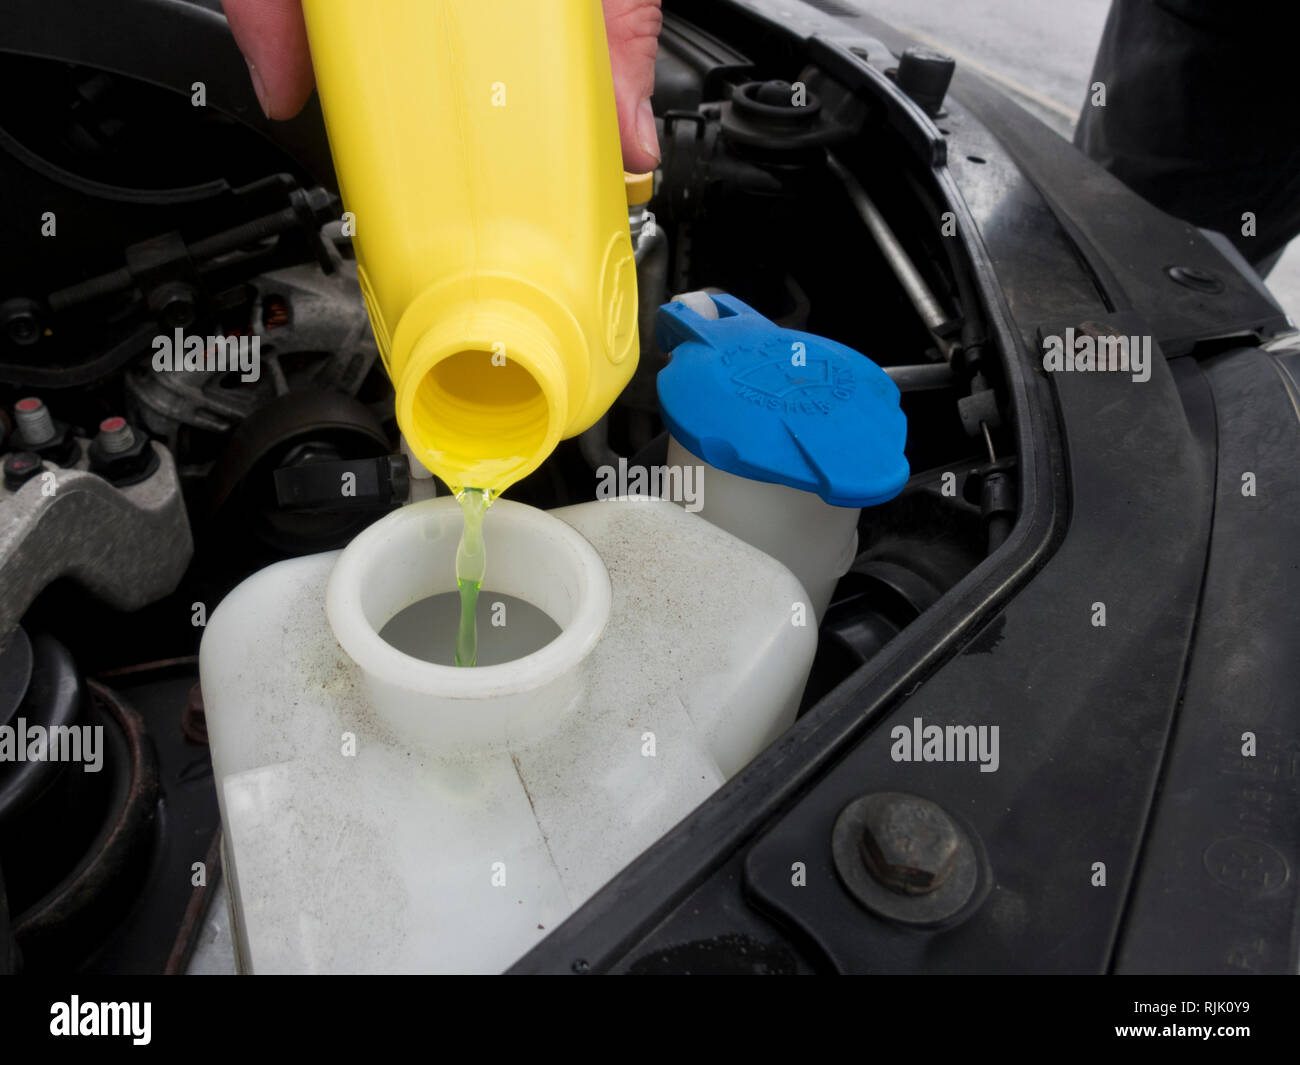 Caucasian Man Pouring Coolant or Anti Freeze Into an Antifreeze Reservoir Bottle, Part of a Car Engine Maintenance Routine Stock Photo